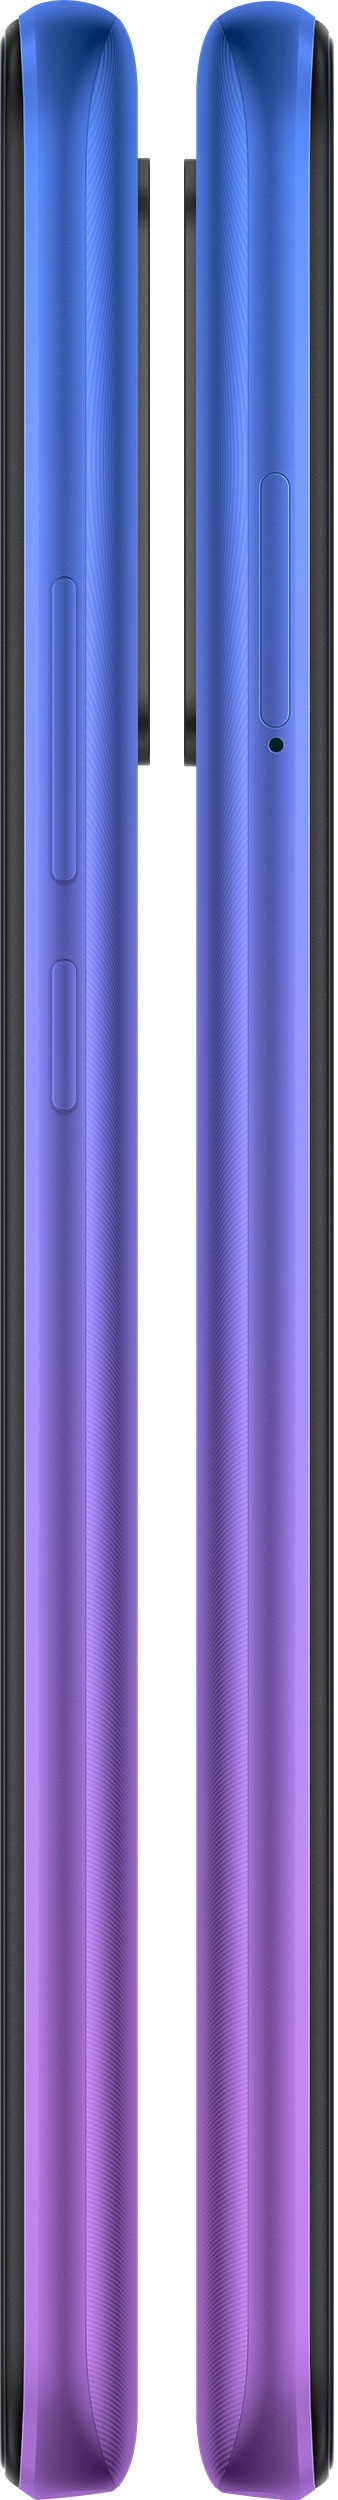 Xiaomi Redmi 9 3/32GB